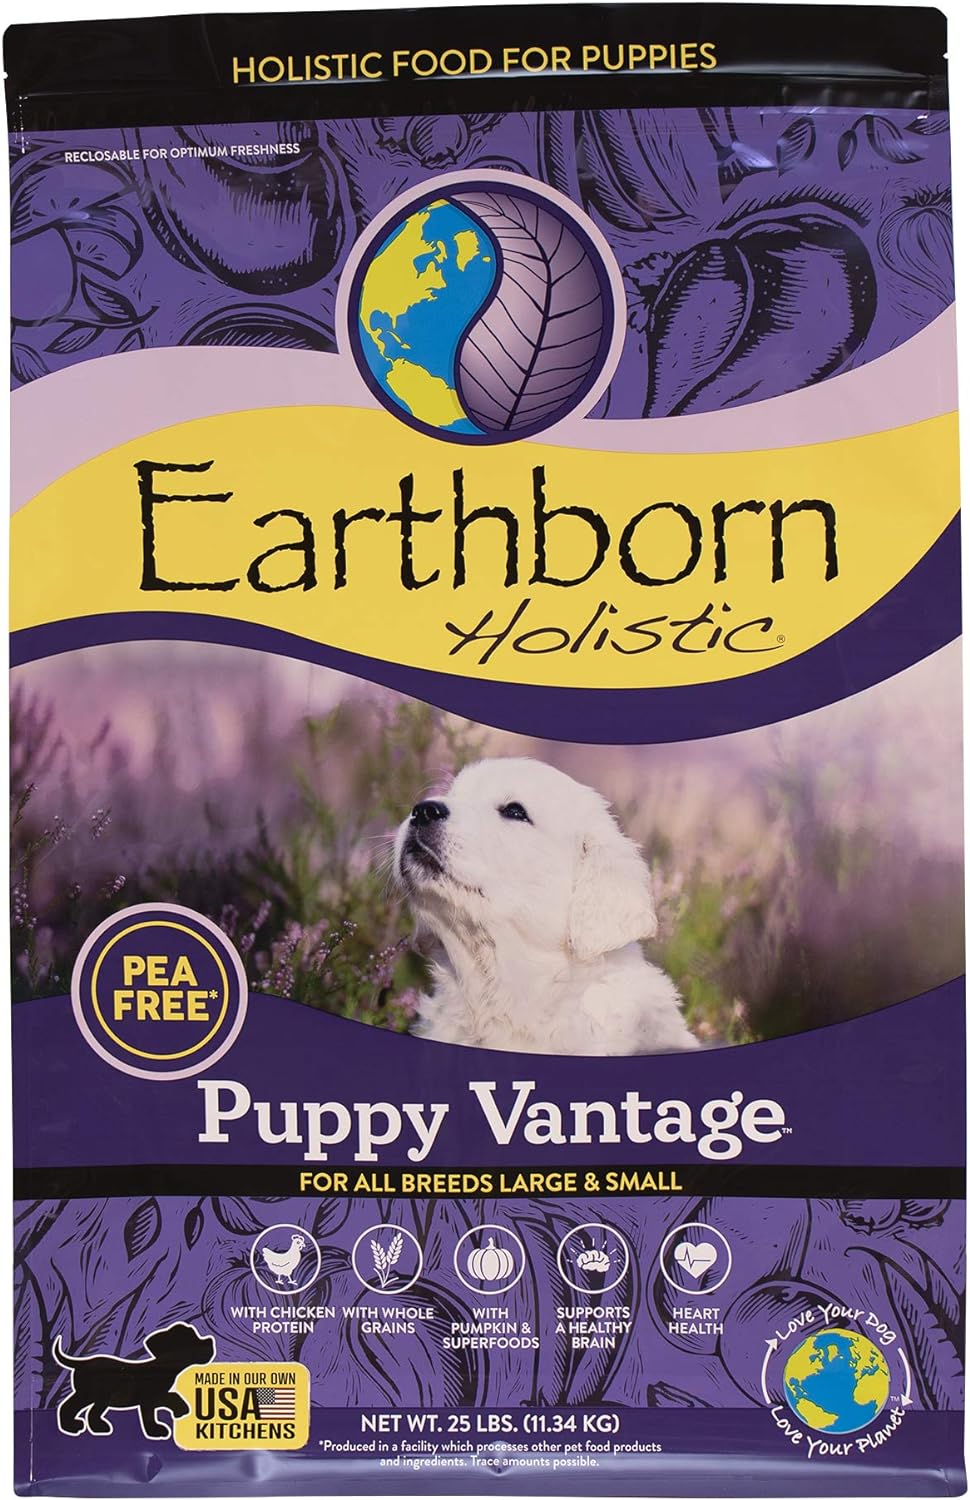 Earthborn Holistic Puppy Vantage Dry Dog Food – Gallery Image 1